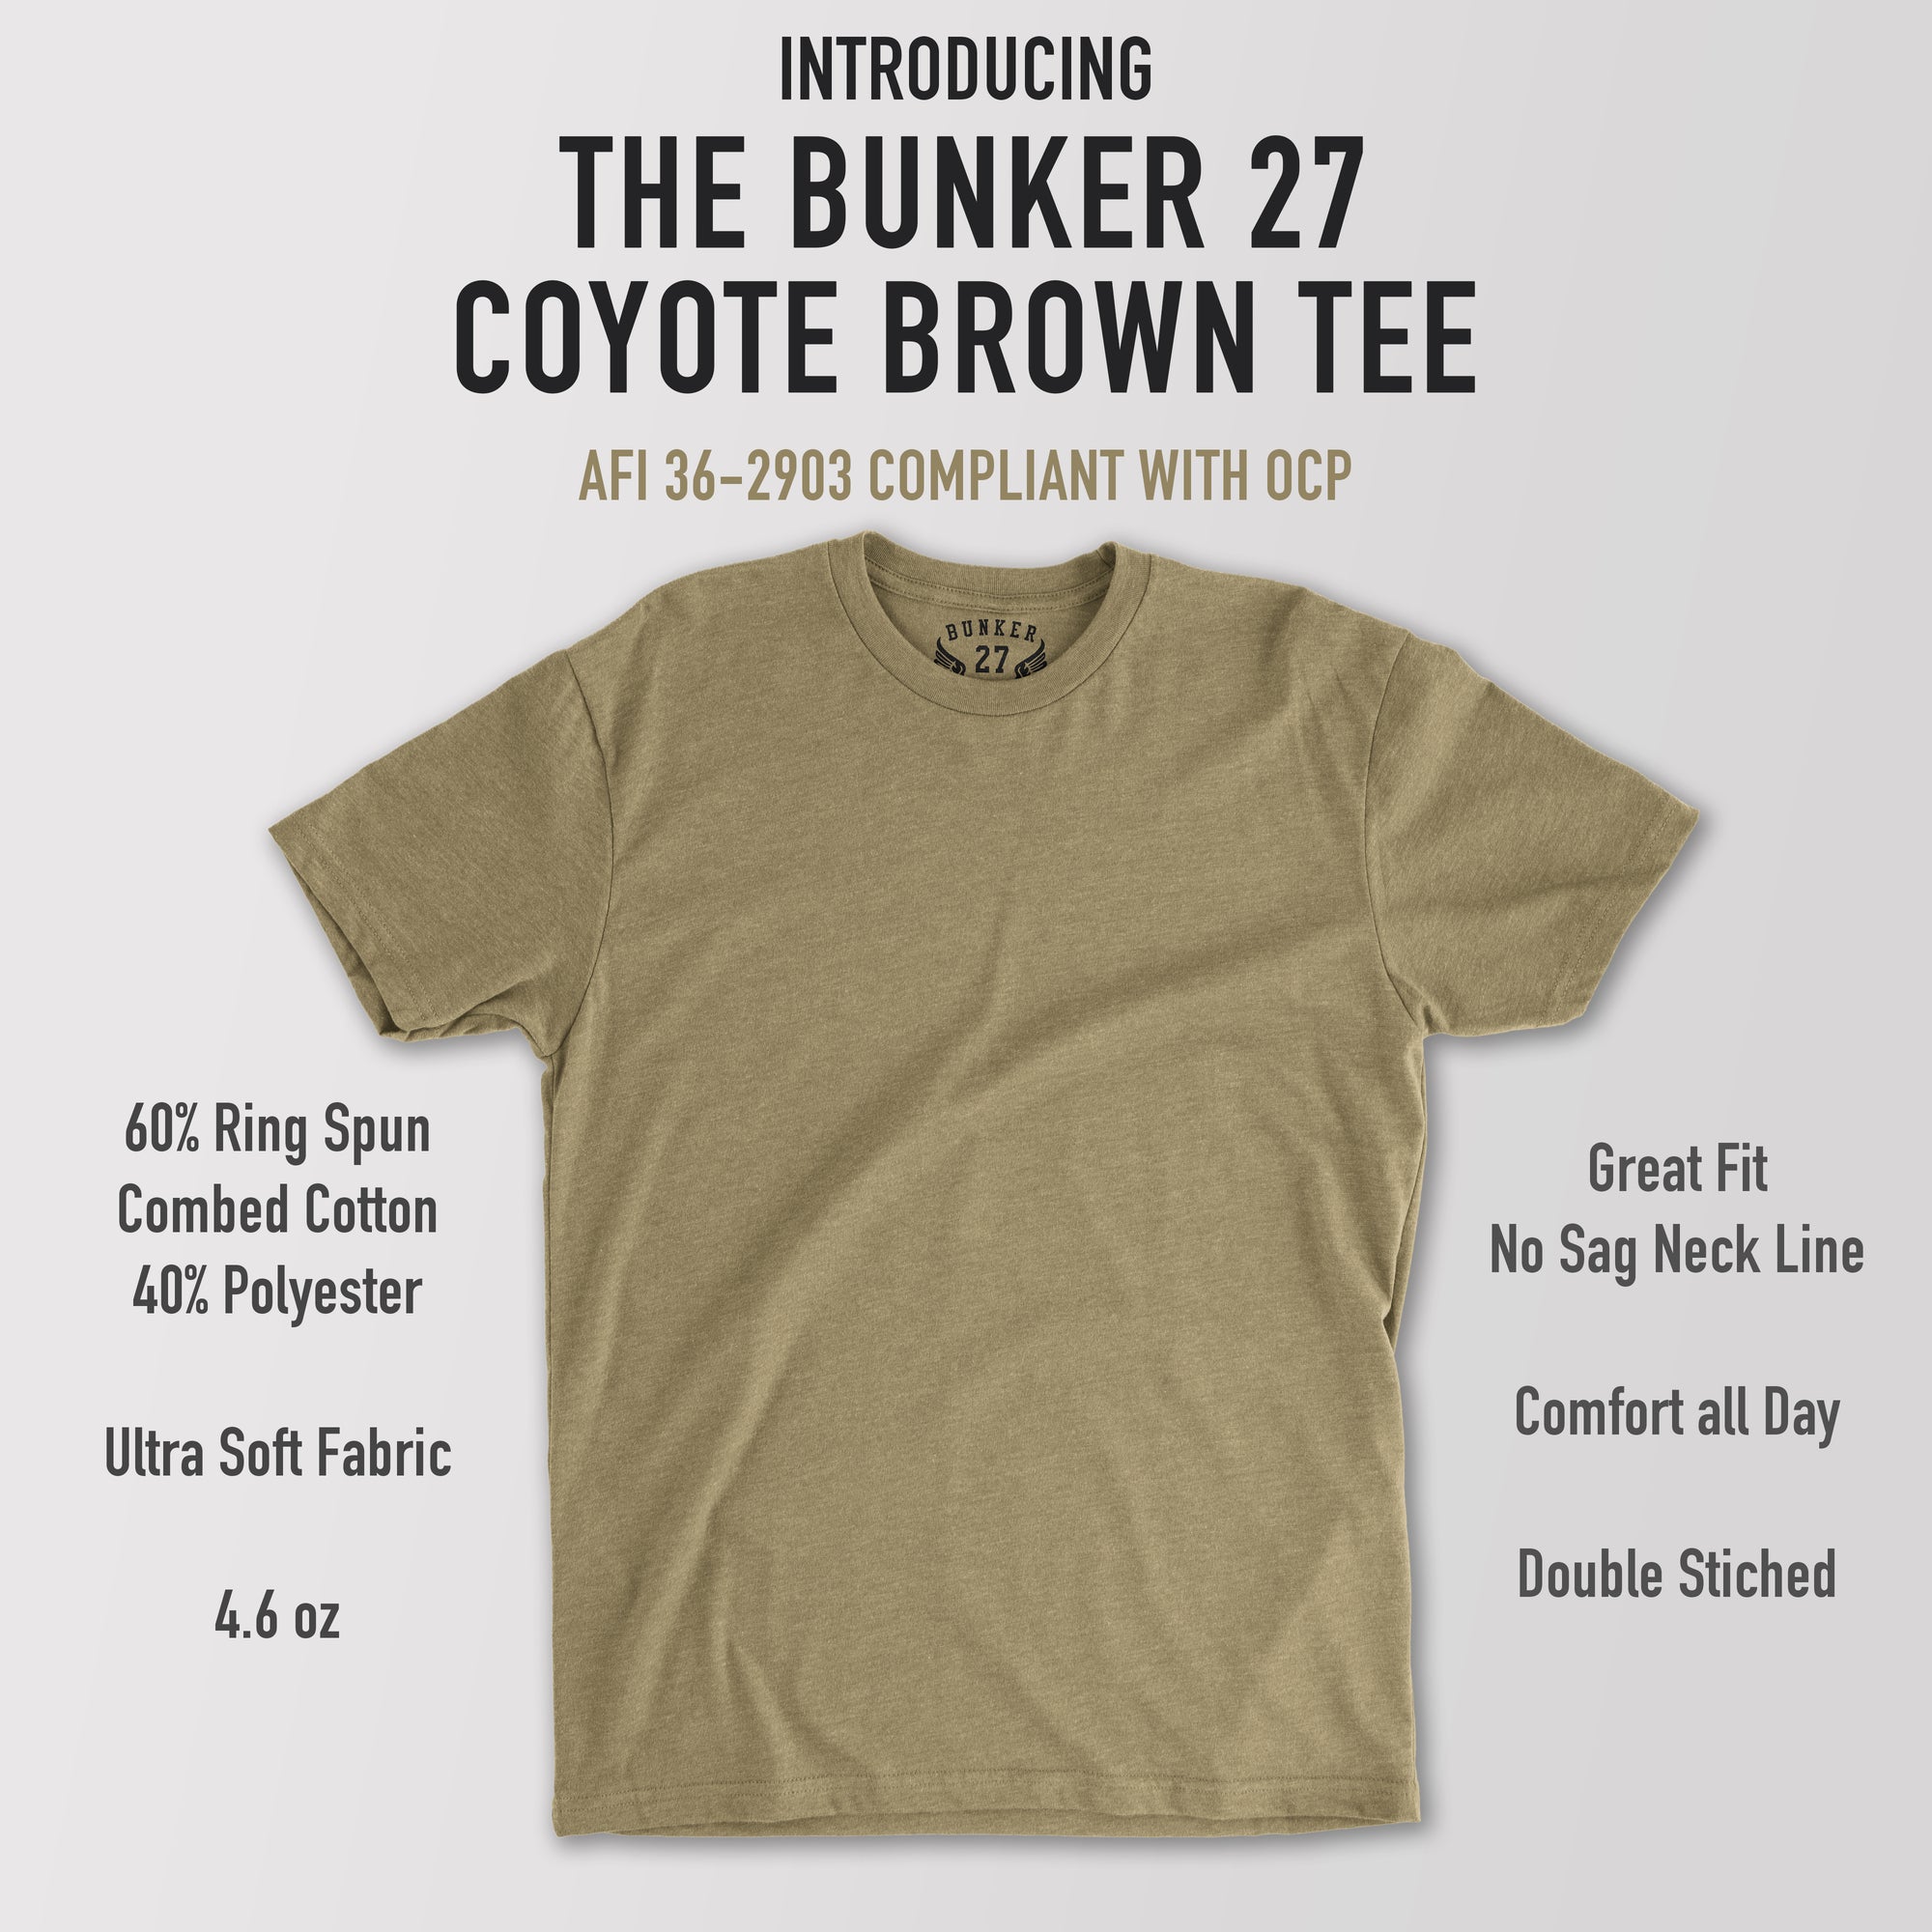 Coyote Brown T-Shirt AFI 36-2903, Bunker 27